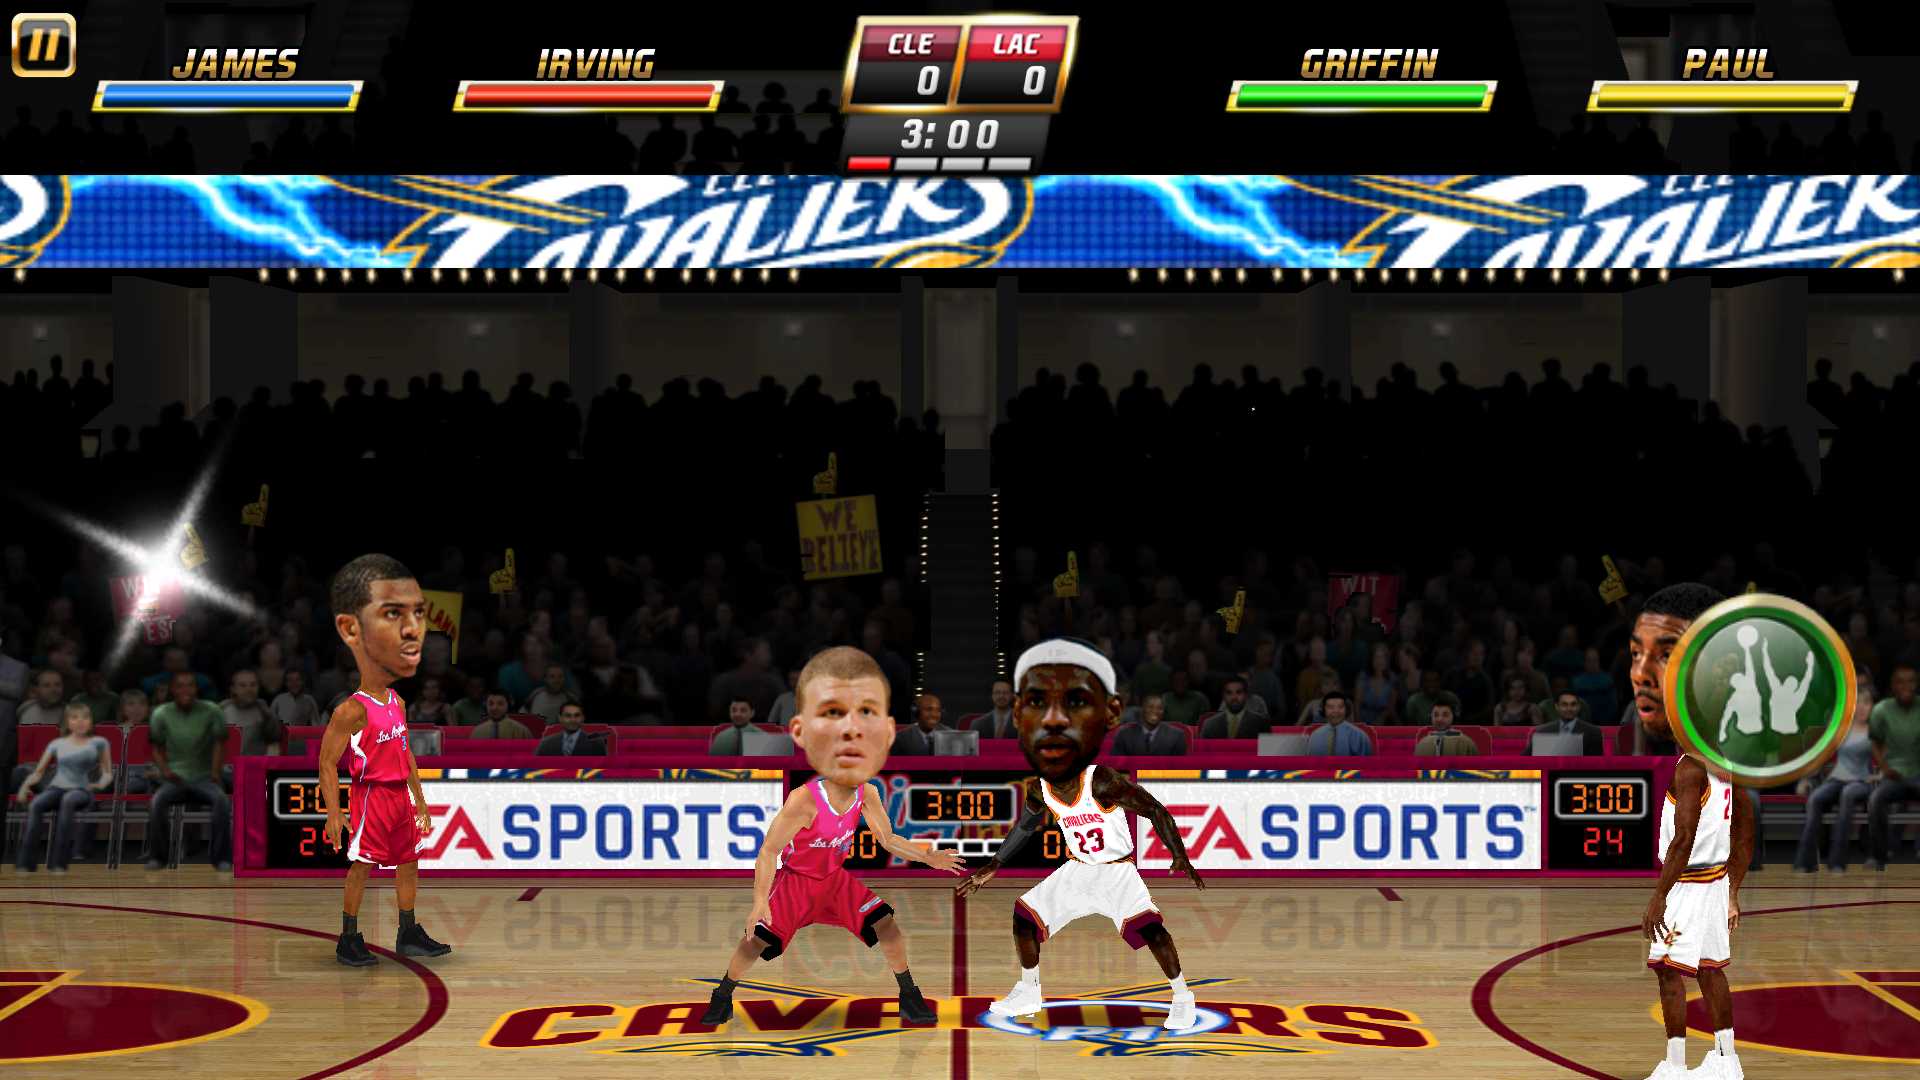 Download & Play NBA NOW 23 on PC & Mac (Emulator)